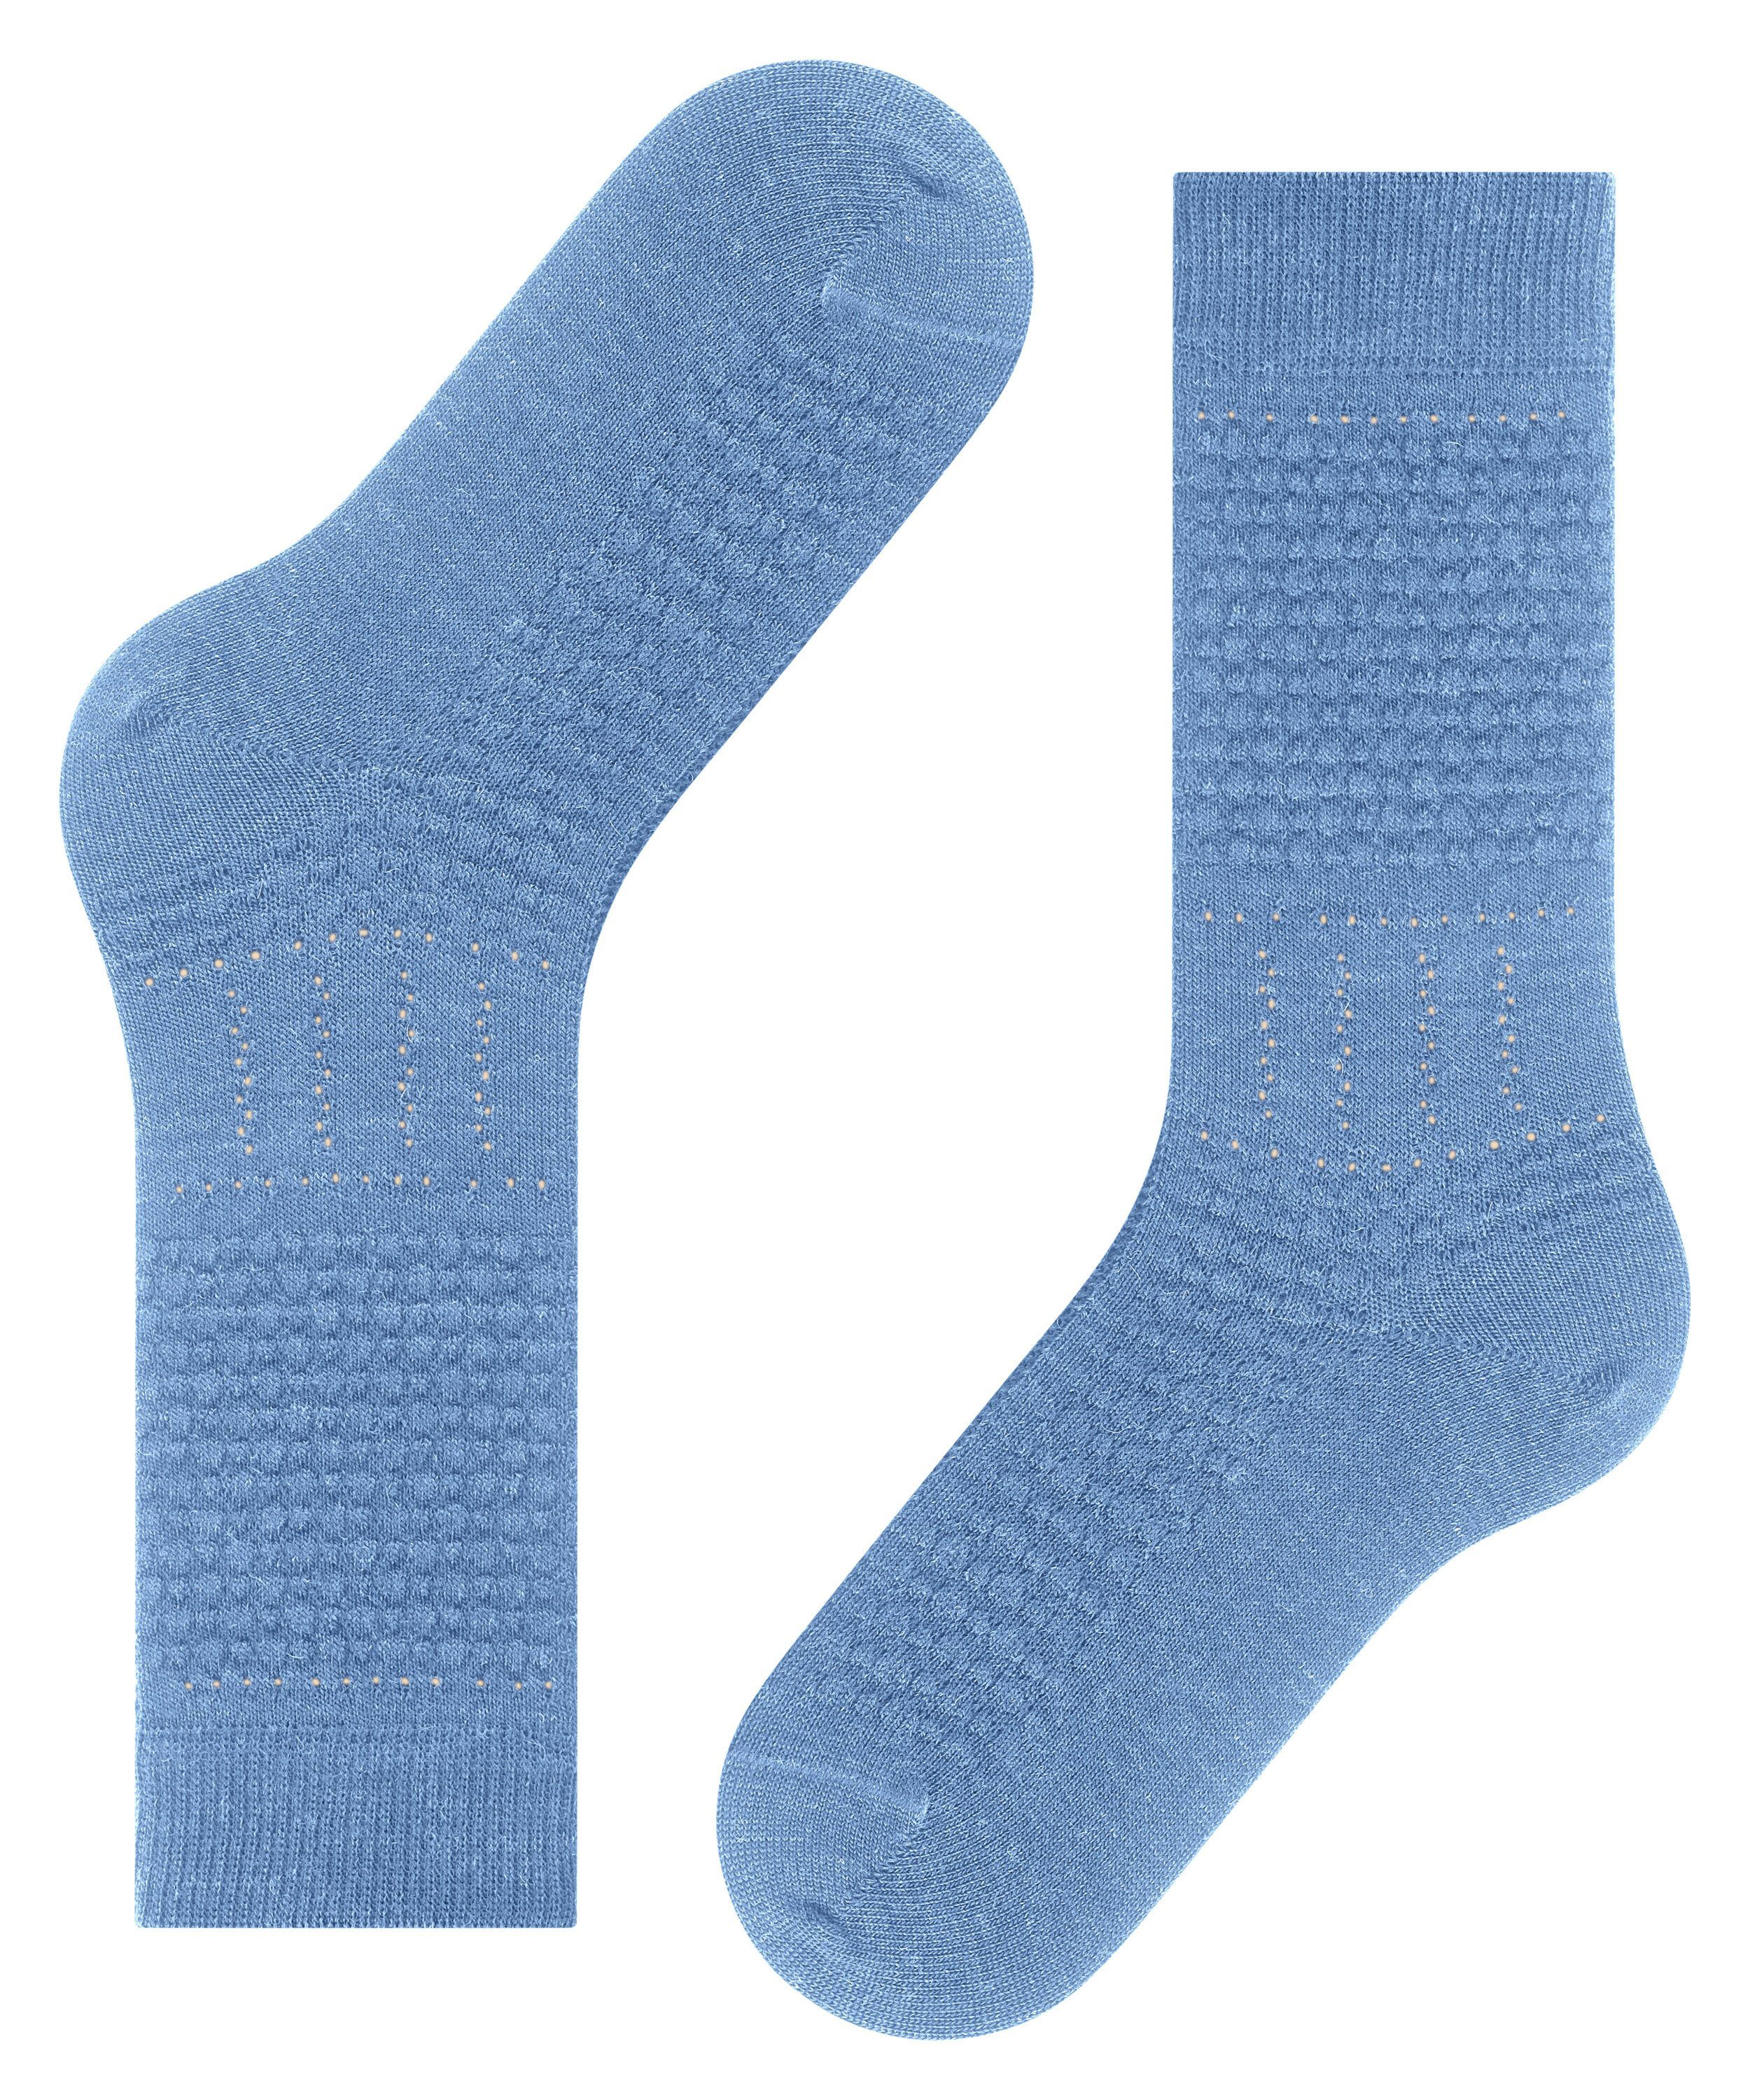 Fibre arcticblue (6367) (1-Paar) FALKE Socken Root